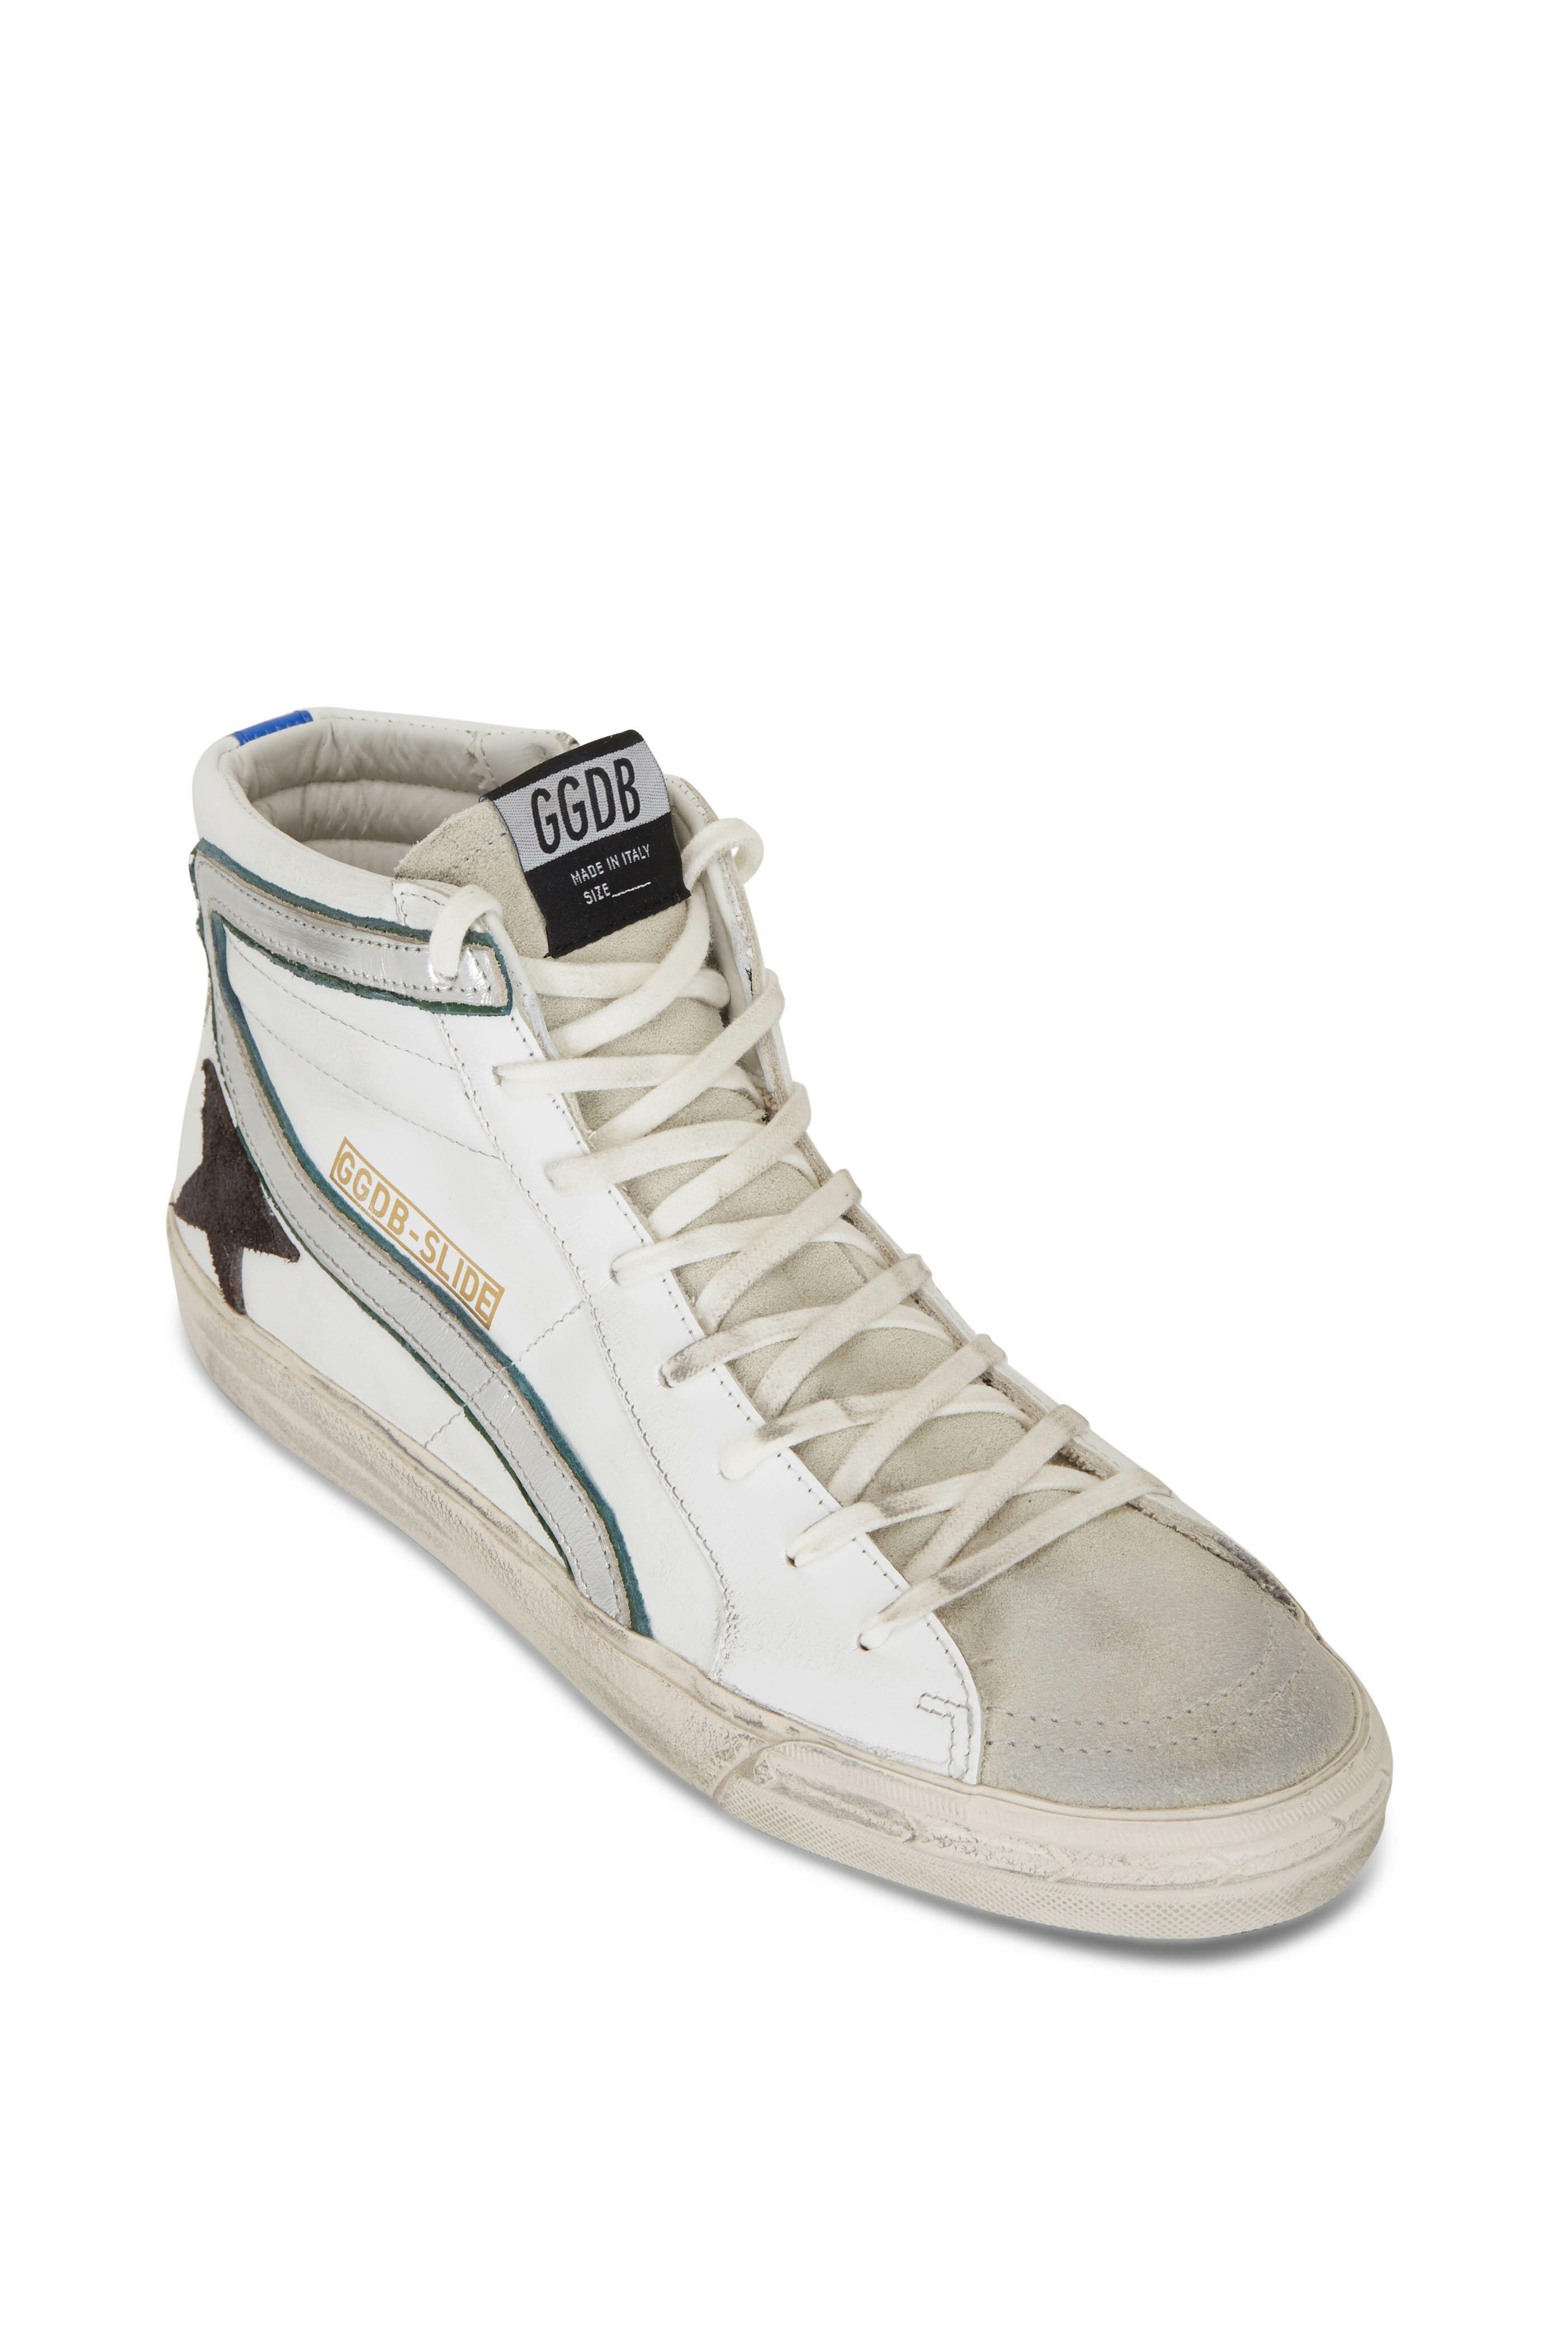 Golden Goose - Slide White Leather High-Top Sneaker